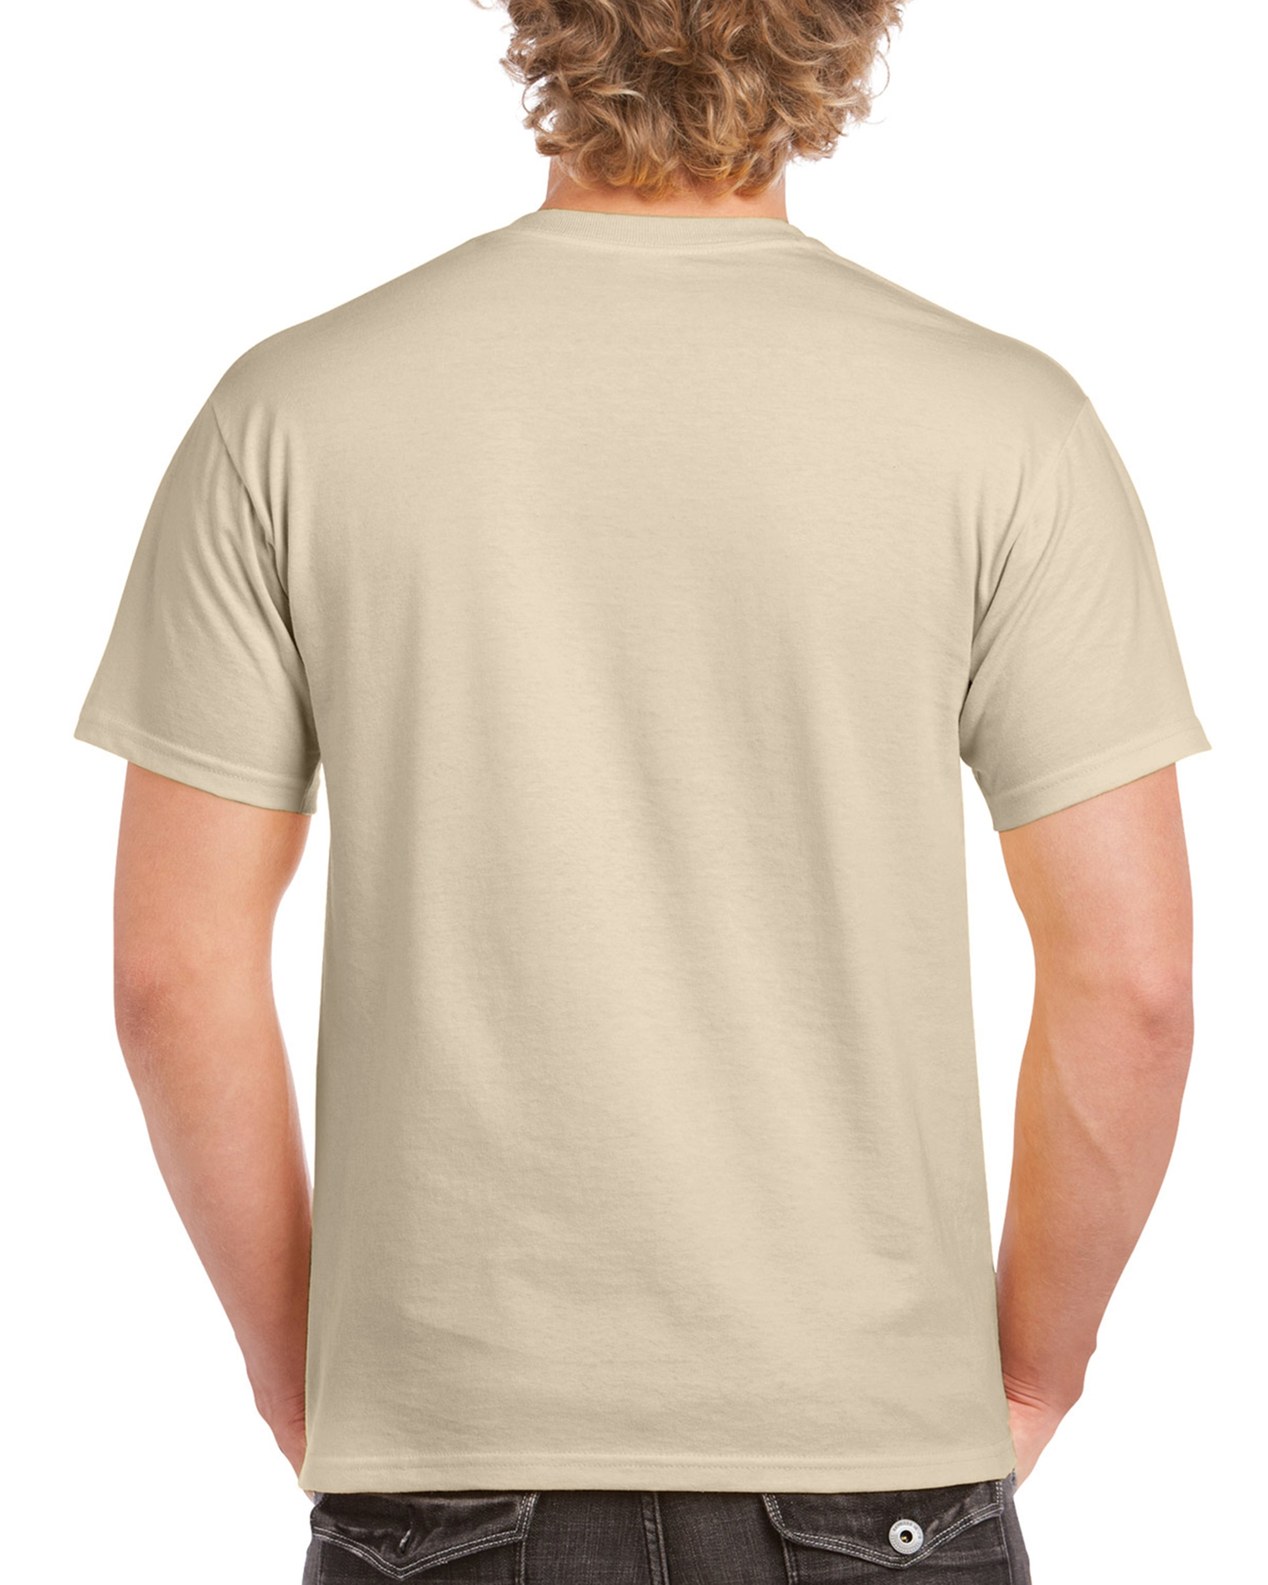 Custom Printed Gildan Ultra Cotton T Shirt - Coastal Reign